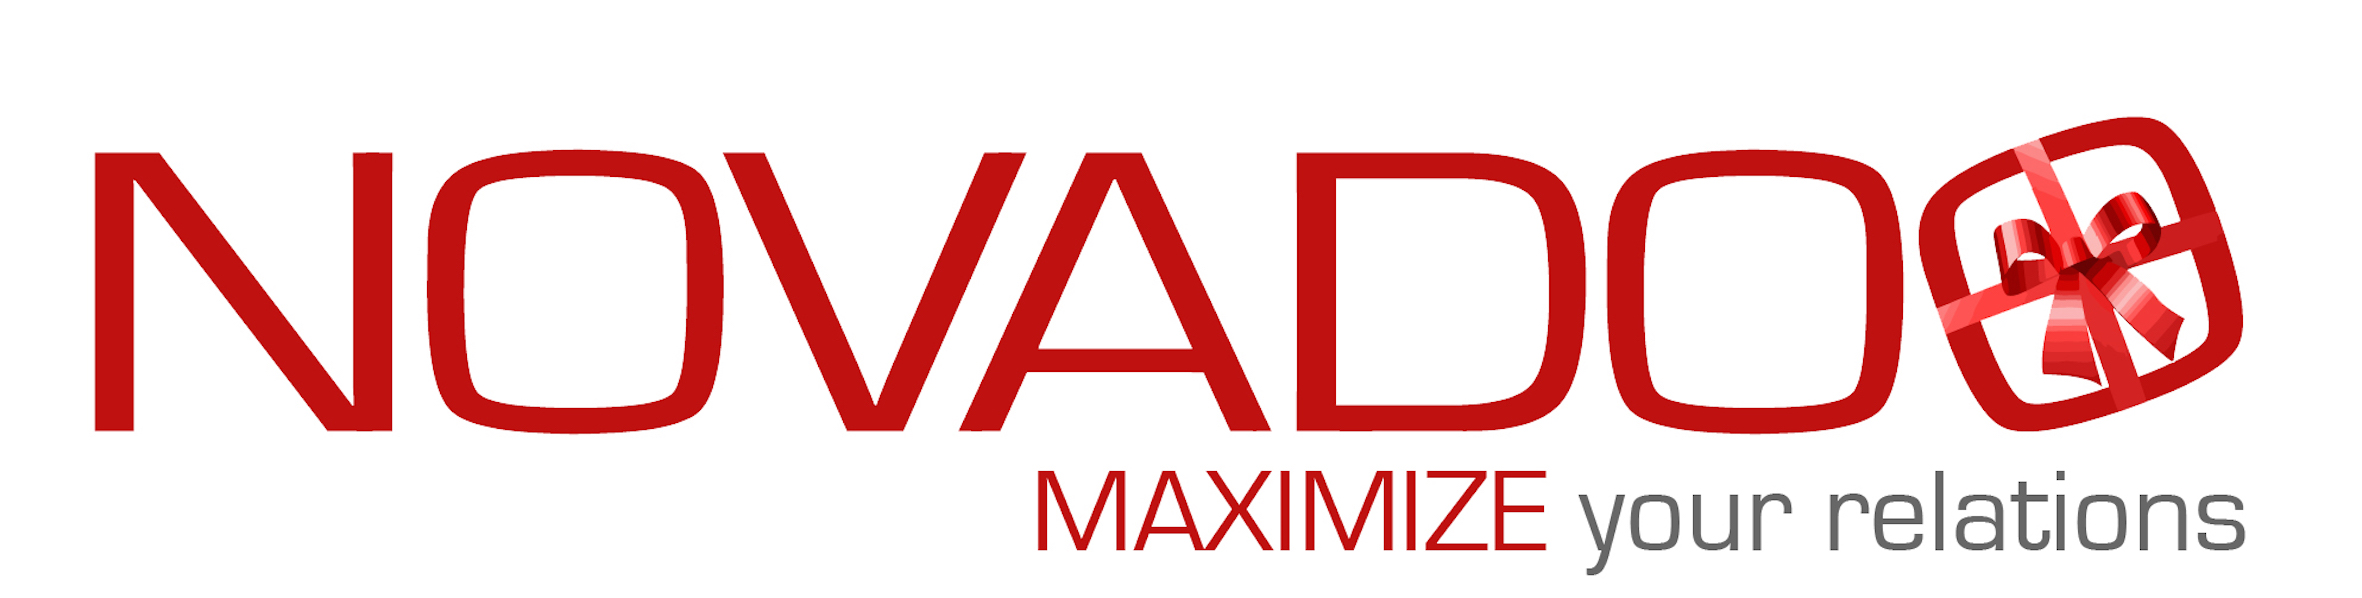 NOVADOO_Logo_Maximize